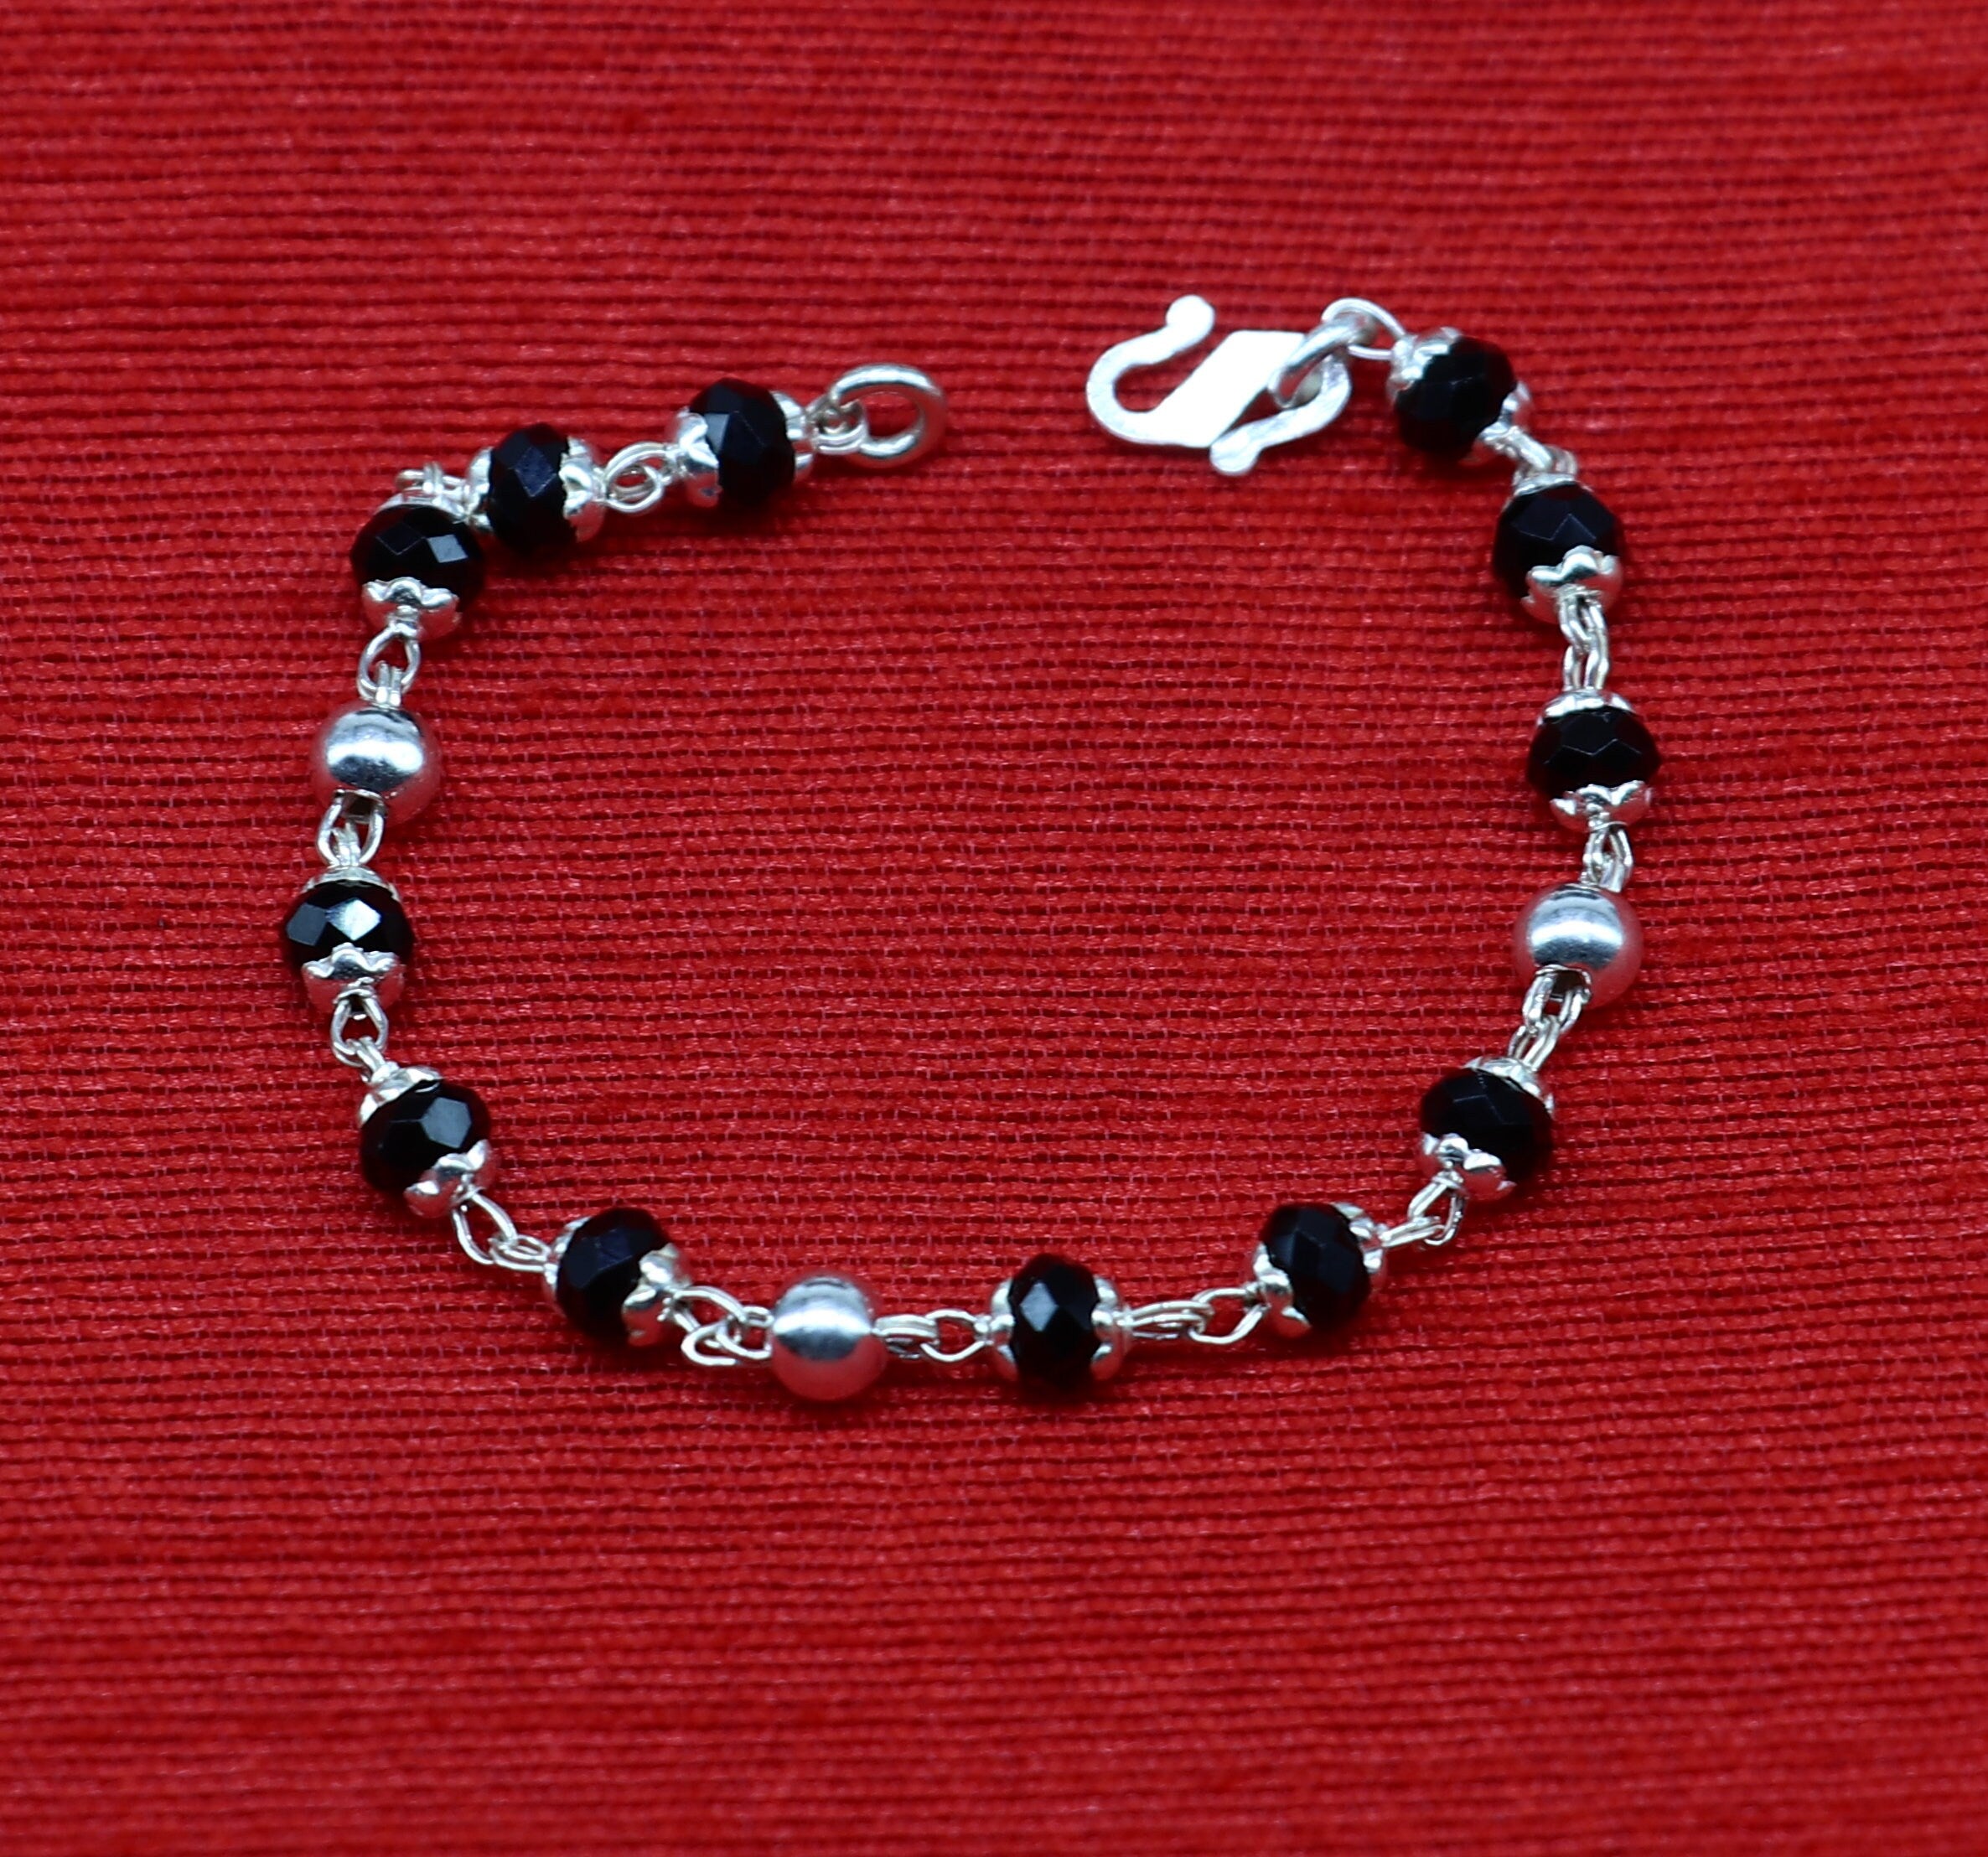 925 Sterling Silver Nazariya Bracelet with Black Crystals for Women